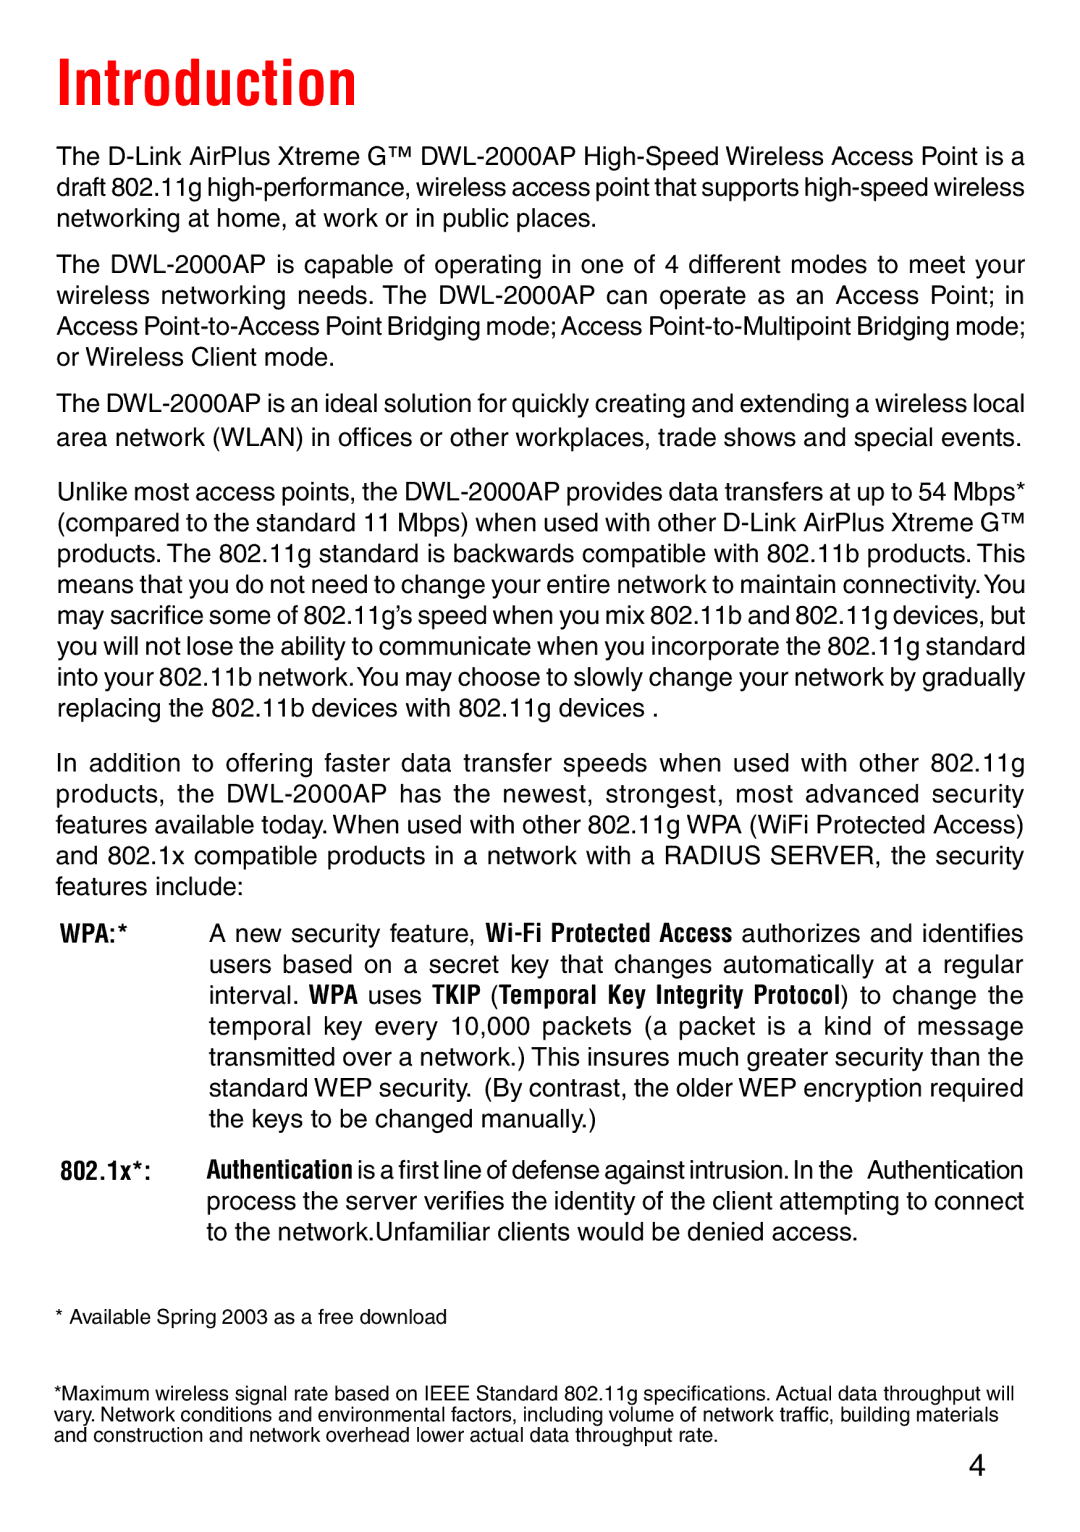 D-Link DWL-2000AP manual Introduction, Wpa 